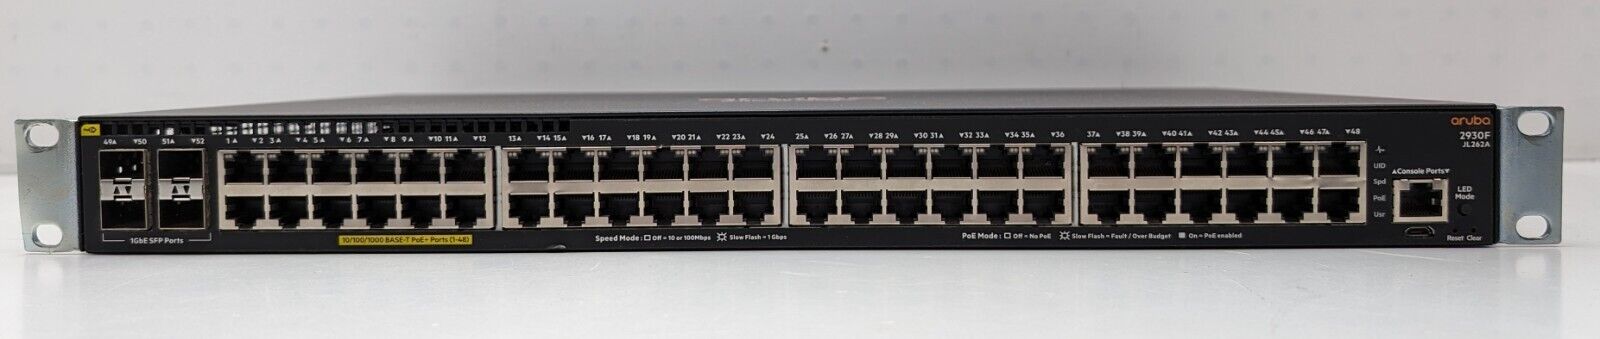 HP Aruba 2930F 48G PoE+ Switch